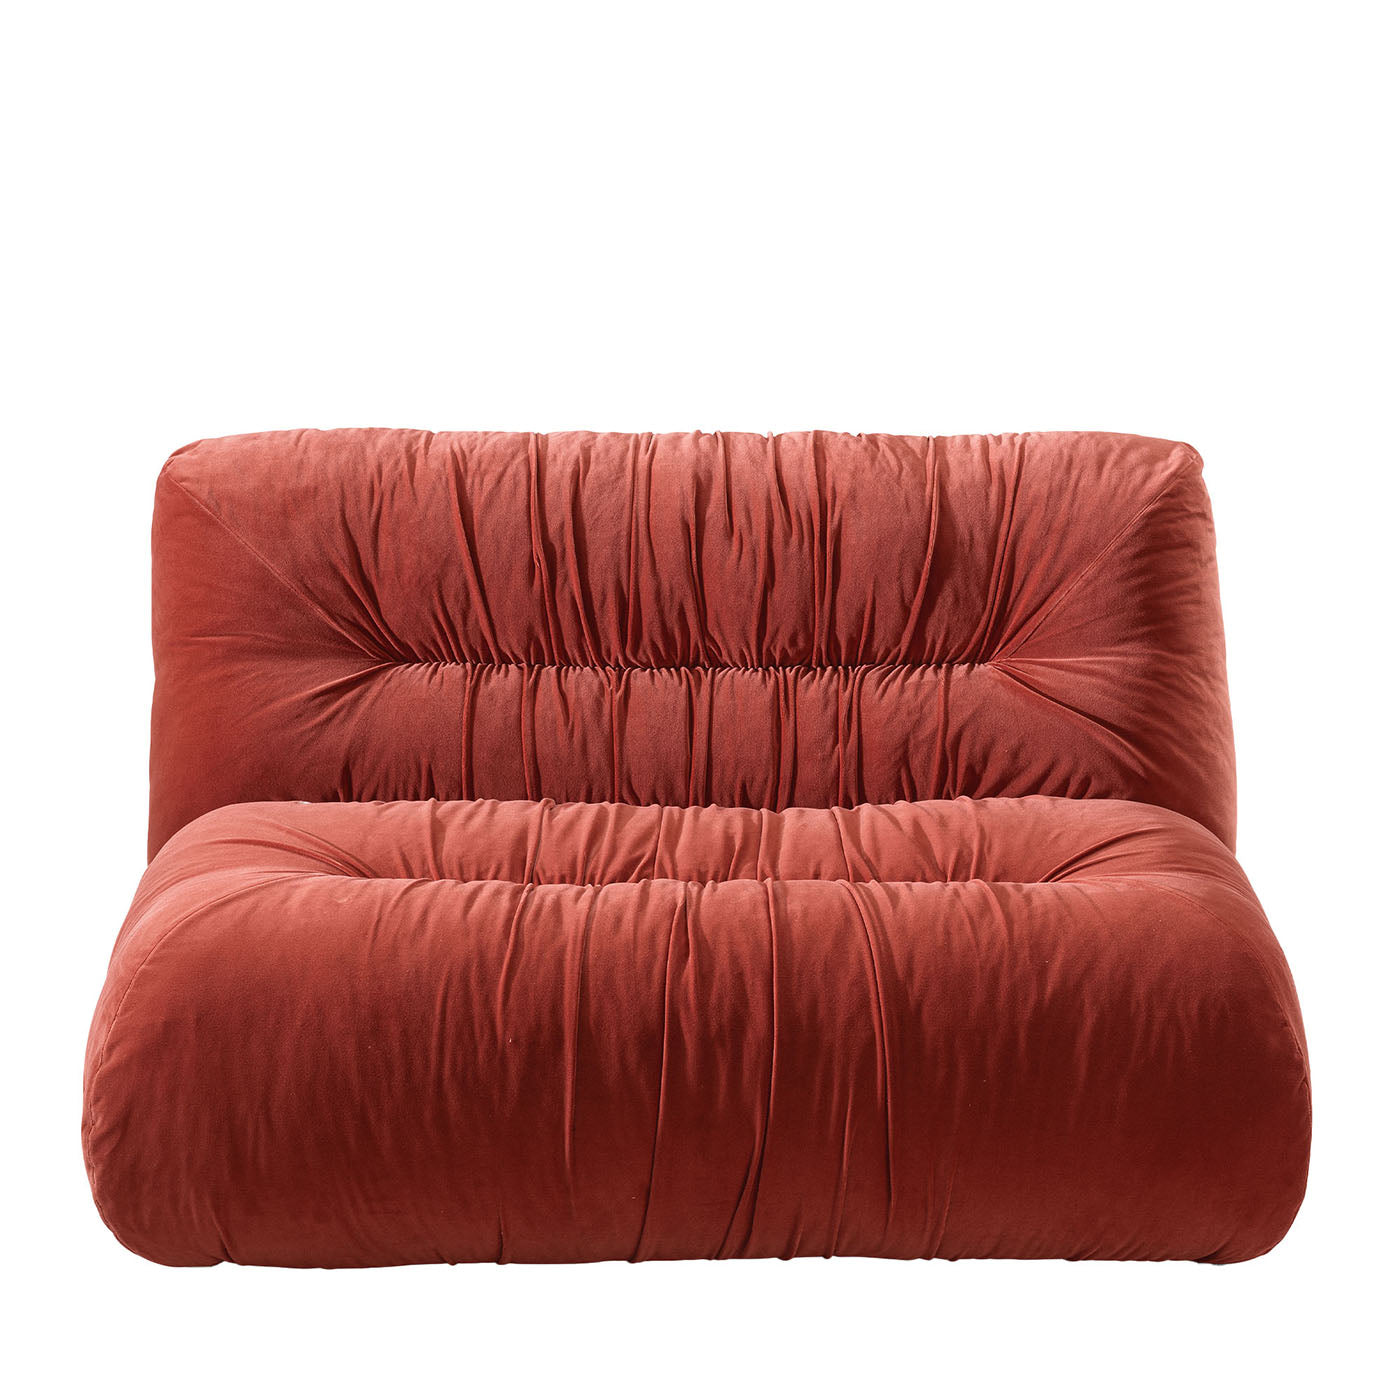 Mambo Orange Fabric Armchair by Lorenza Bozzoli - Main view